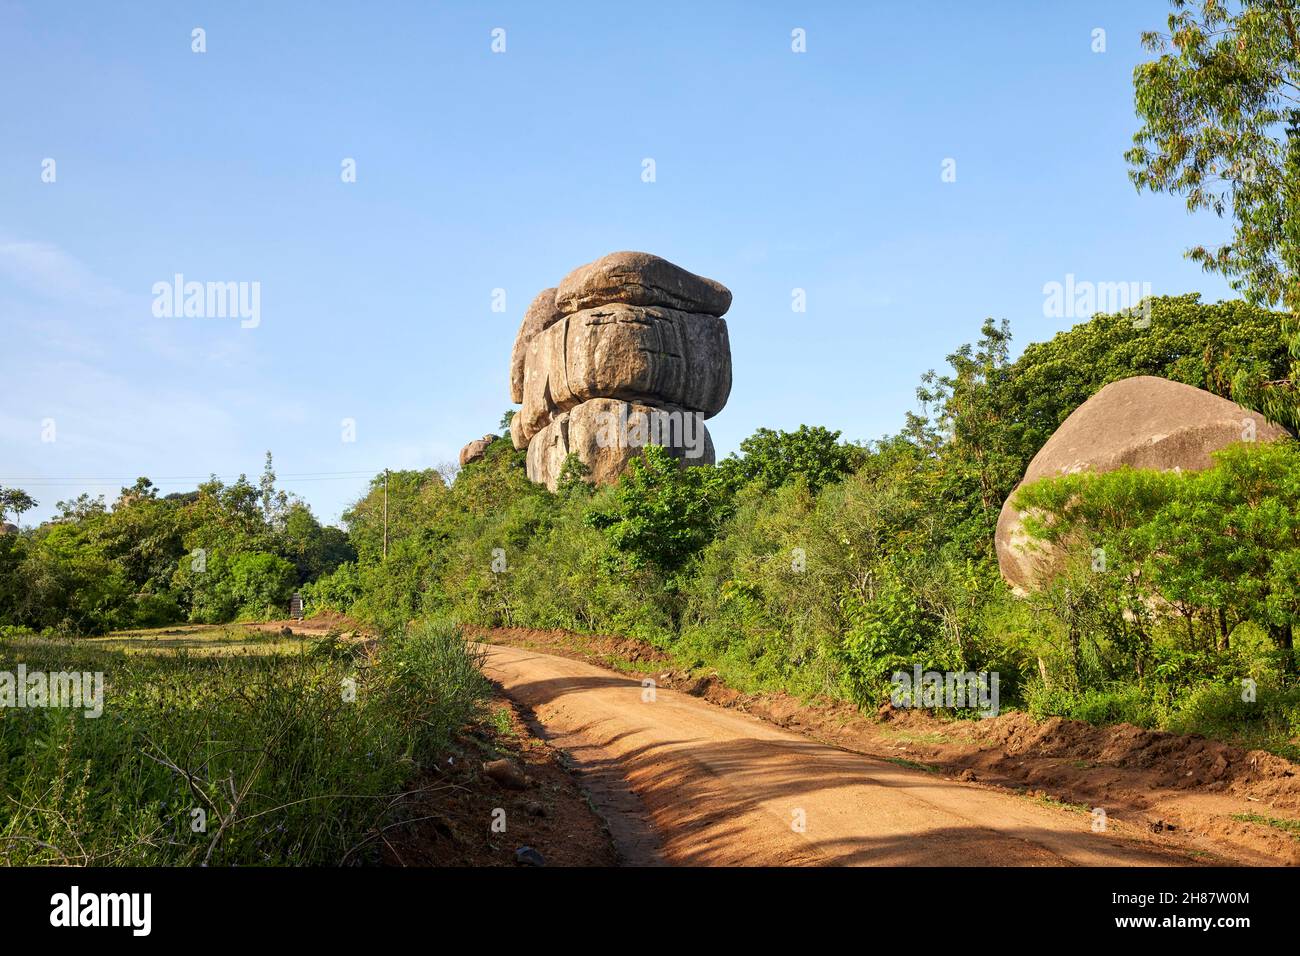 Kit Mikayi Kitmikayi Kitmikaye formazione rocciosa in Kenya, Africa Foto Stock